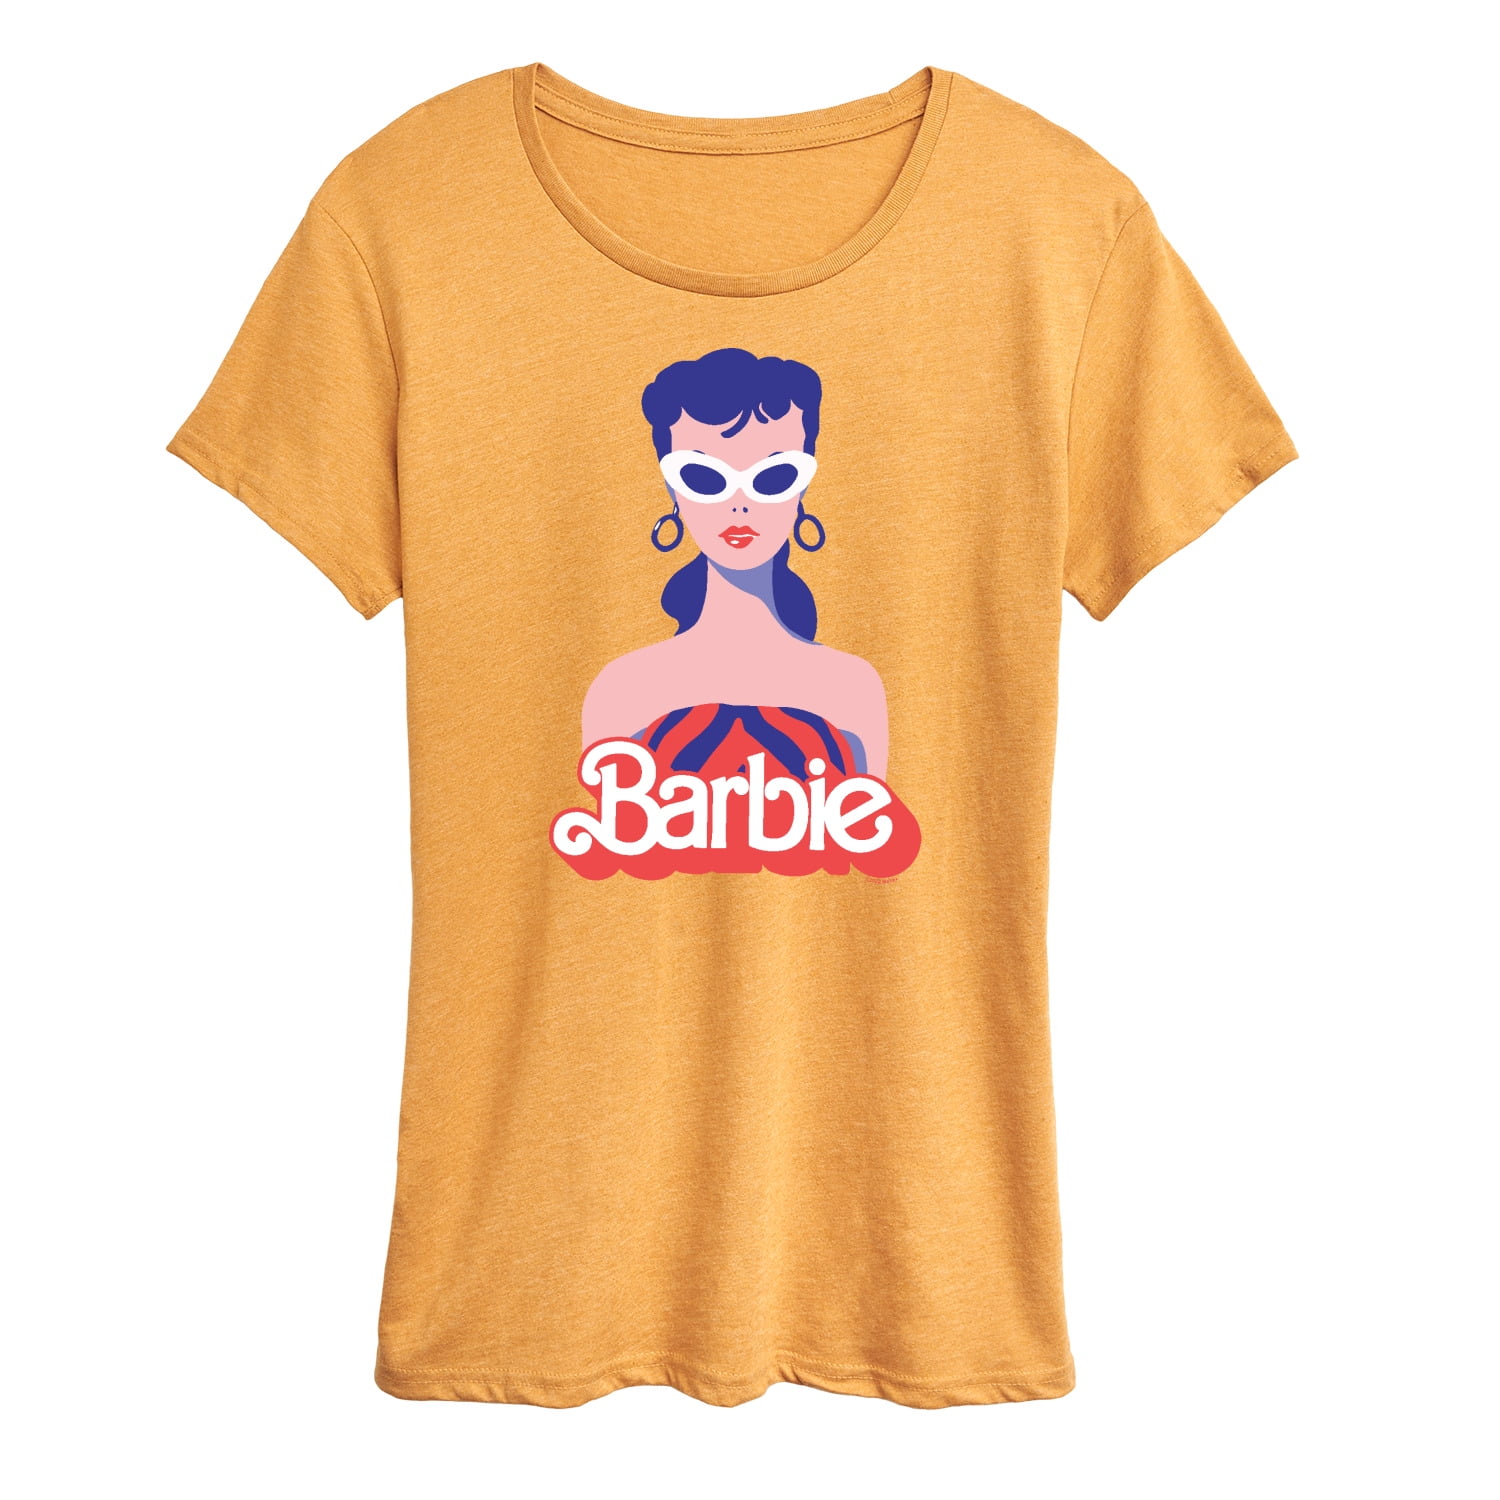 Barbie - Retro Classic Styled Barbie - Women's Short Sleeve Graphic T-Shirt